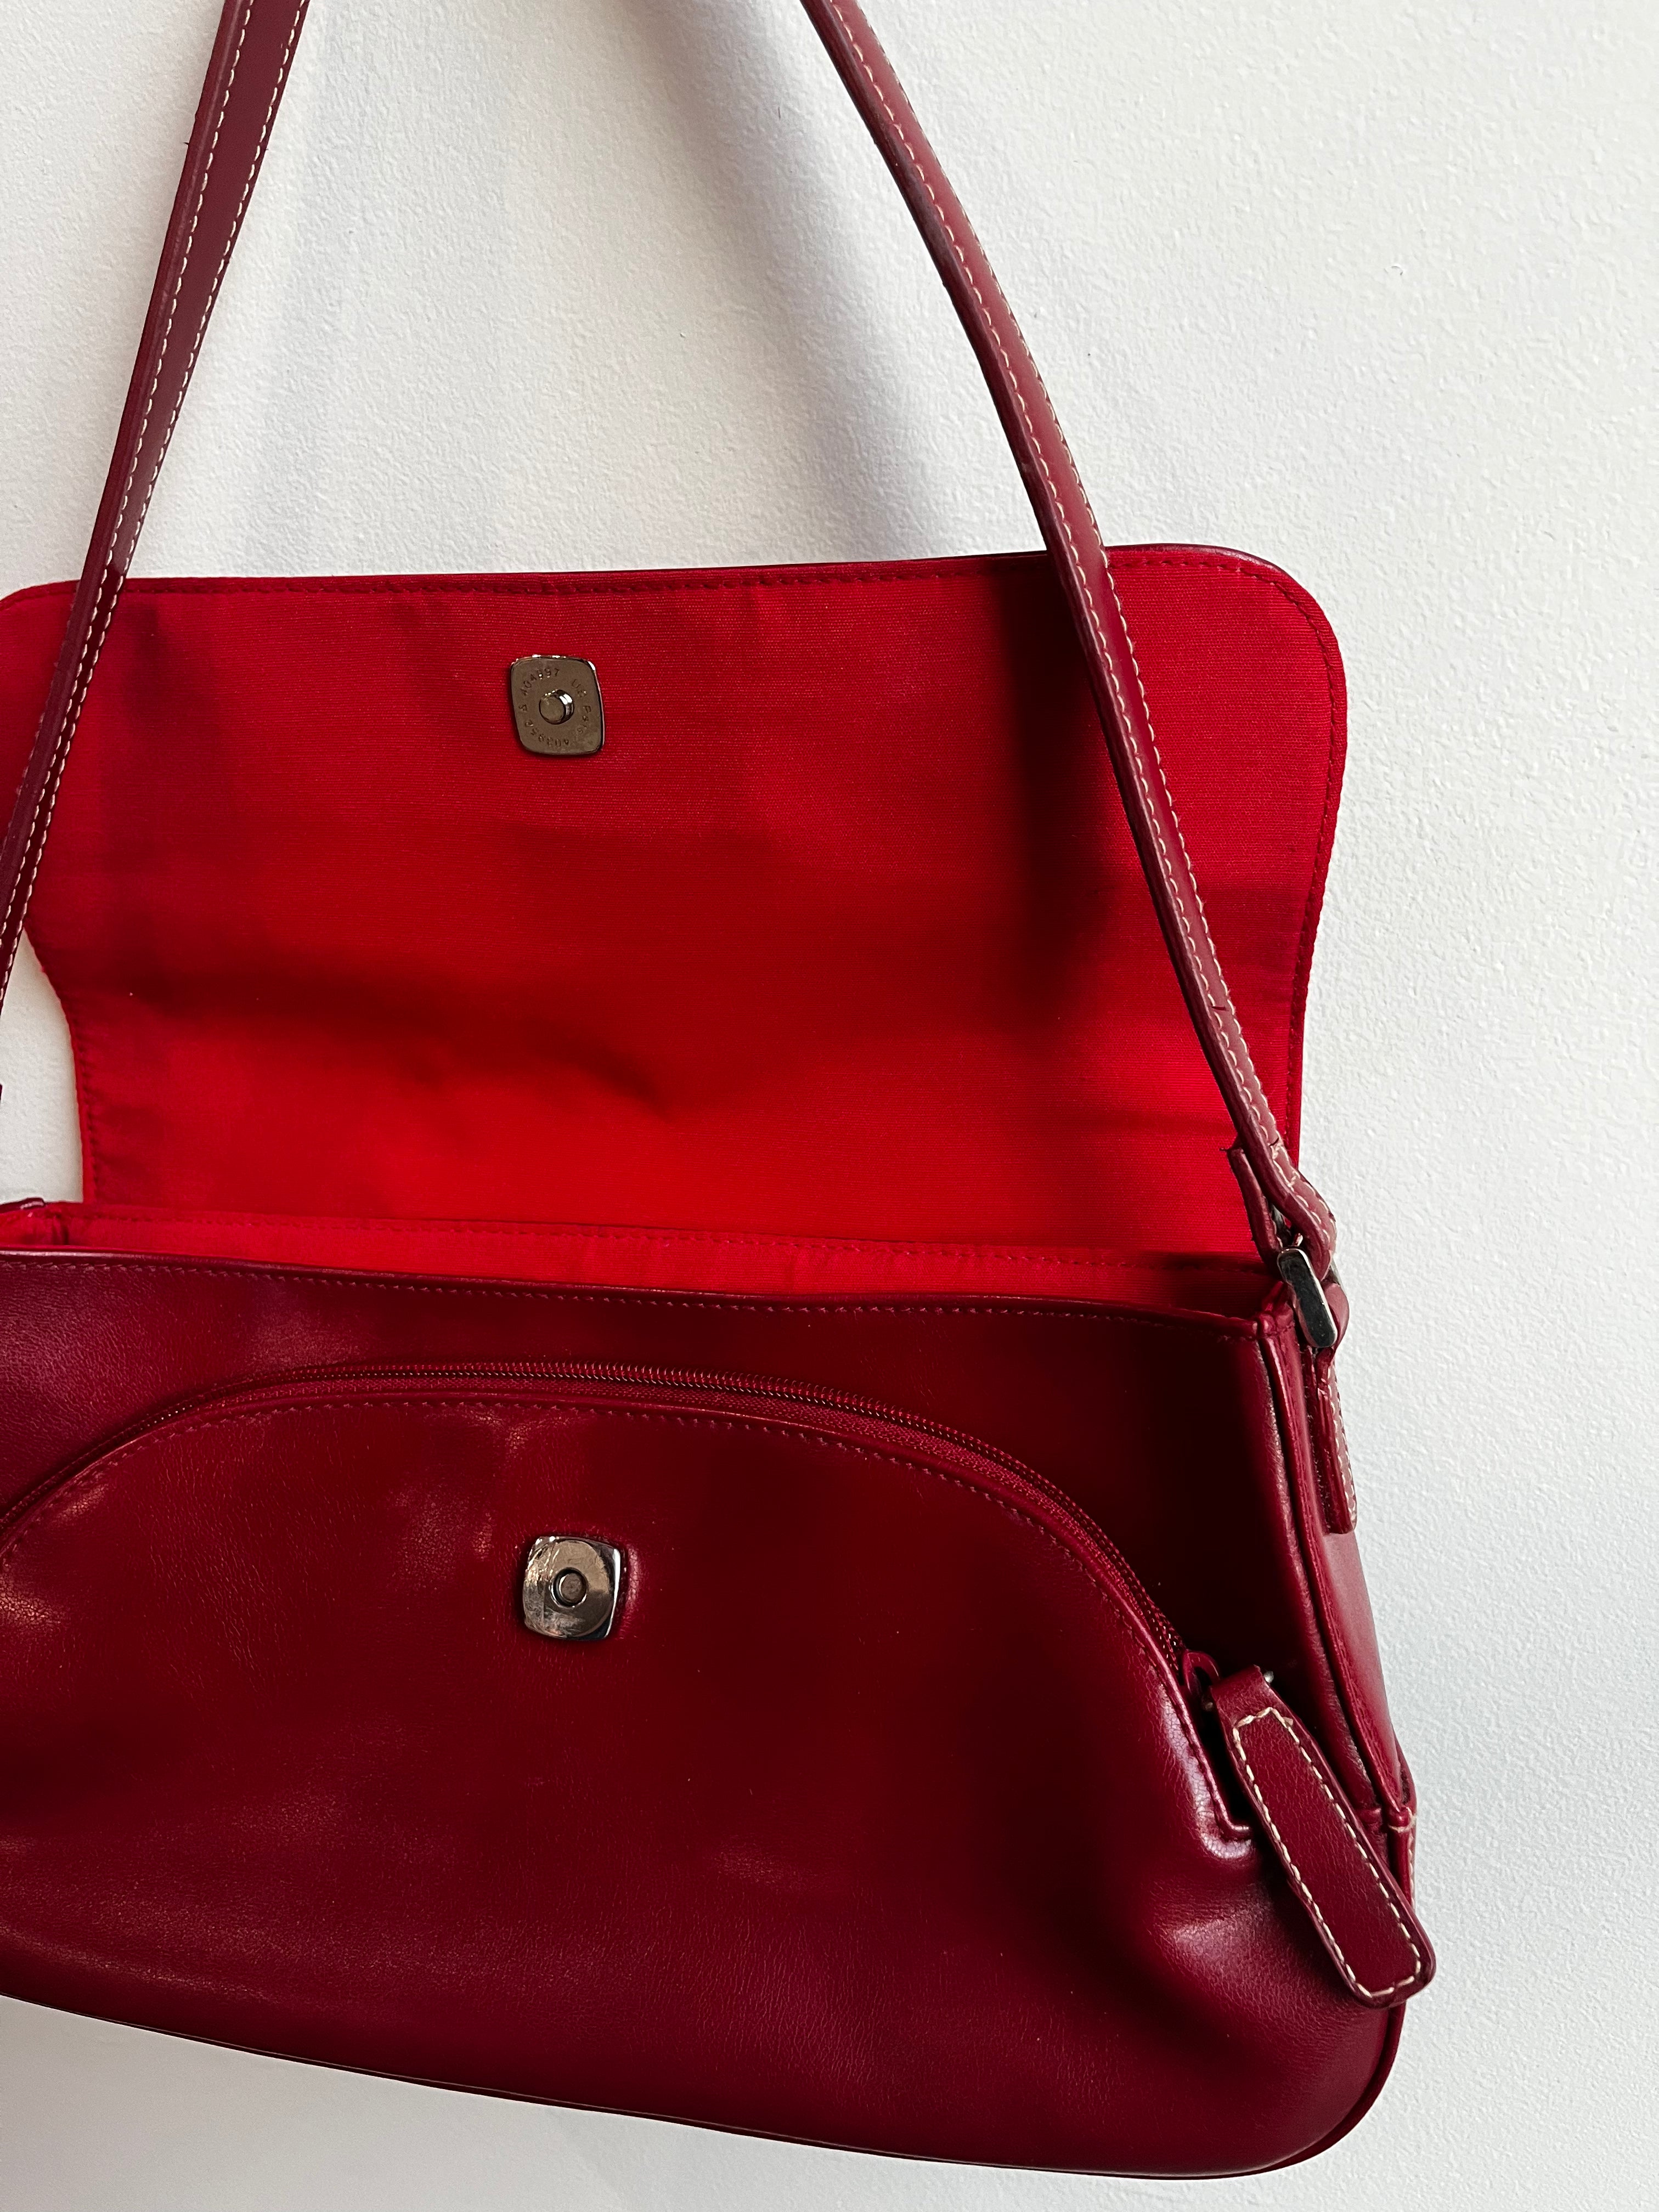 Liz & Co Handbag, Women's Fashion, Bags & Wallets, Tote Bags on Carousell